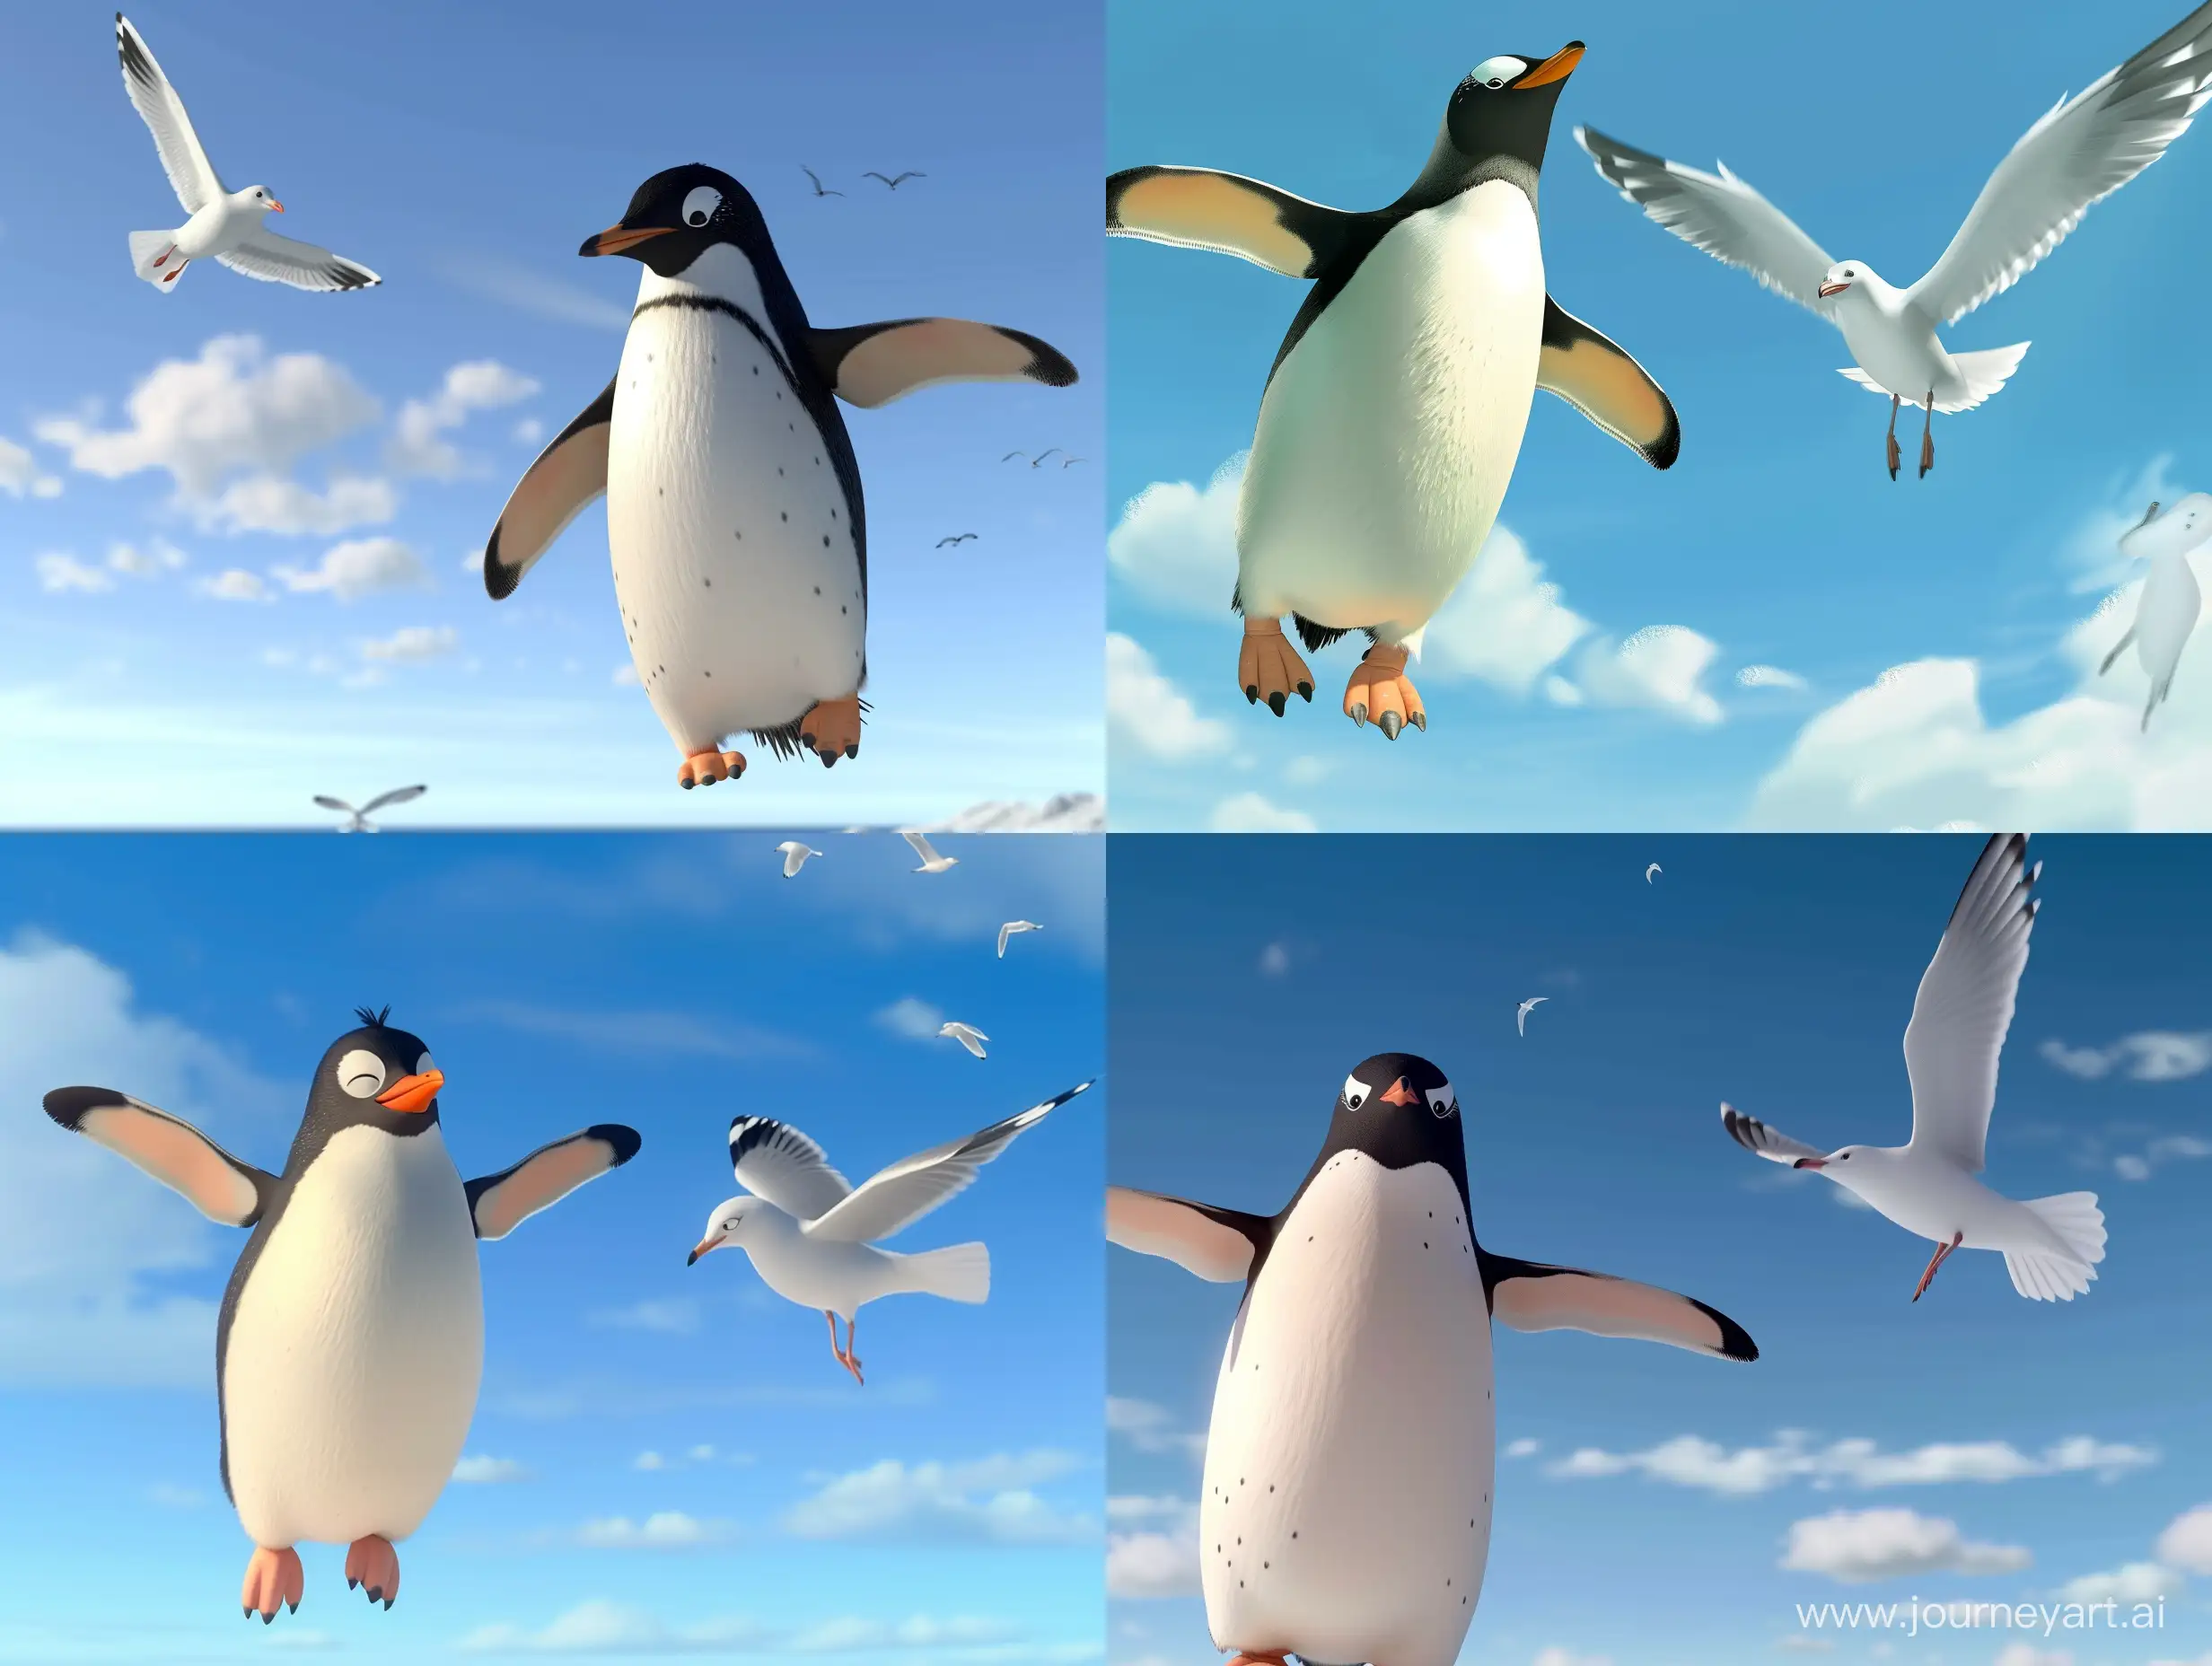 Joyful-Penguin-Takes-Flight-Chasing-Seagull-in-Animated-Sky-Scene